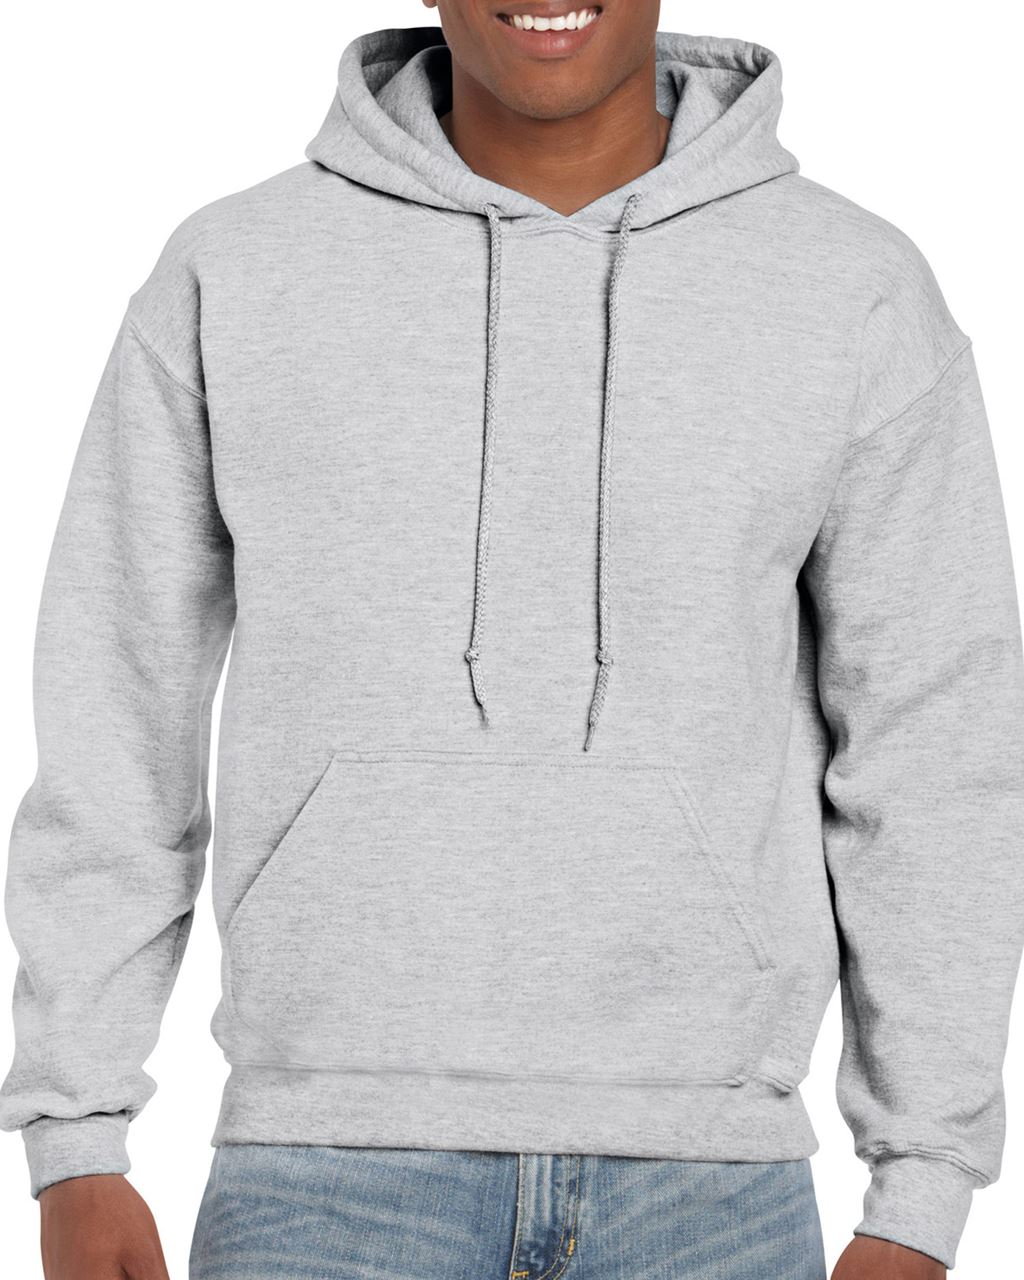 Gildan Dryblend® Adult Hooded Sweatshirt - šedá